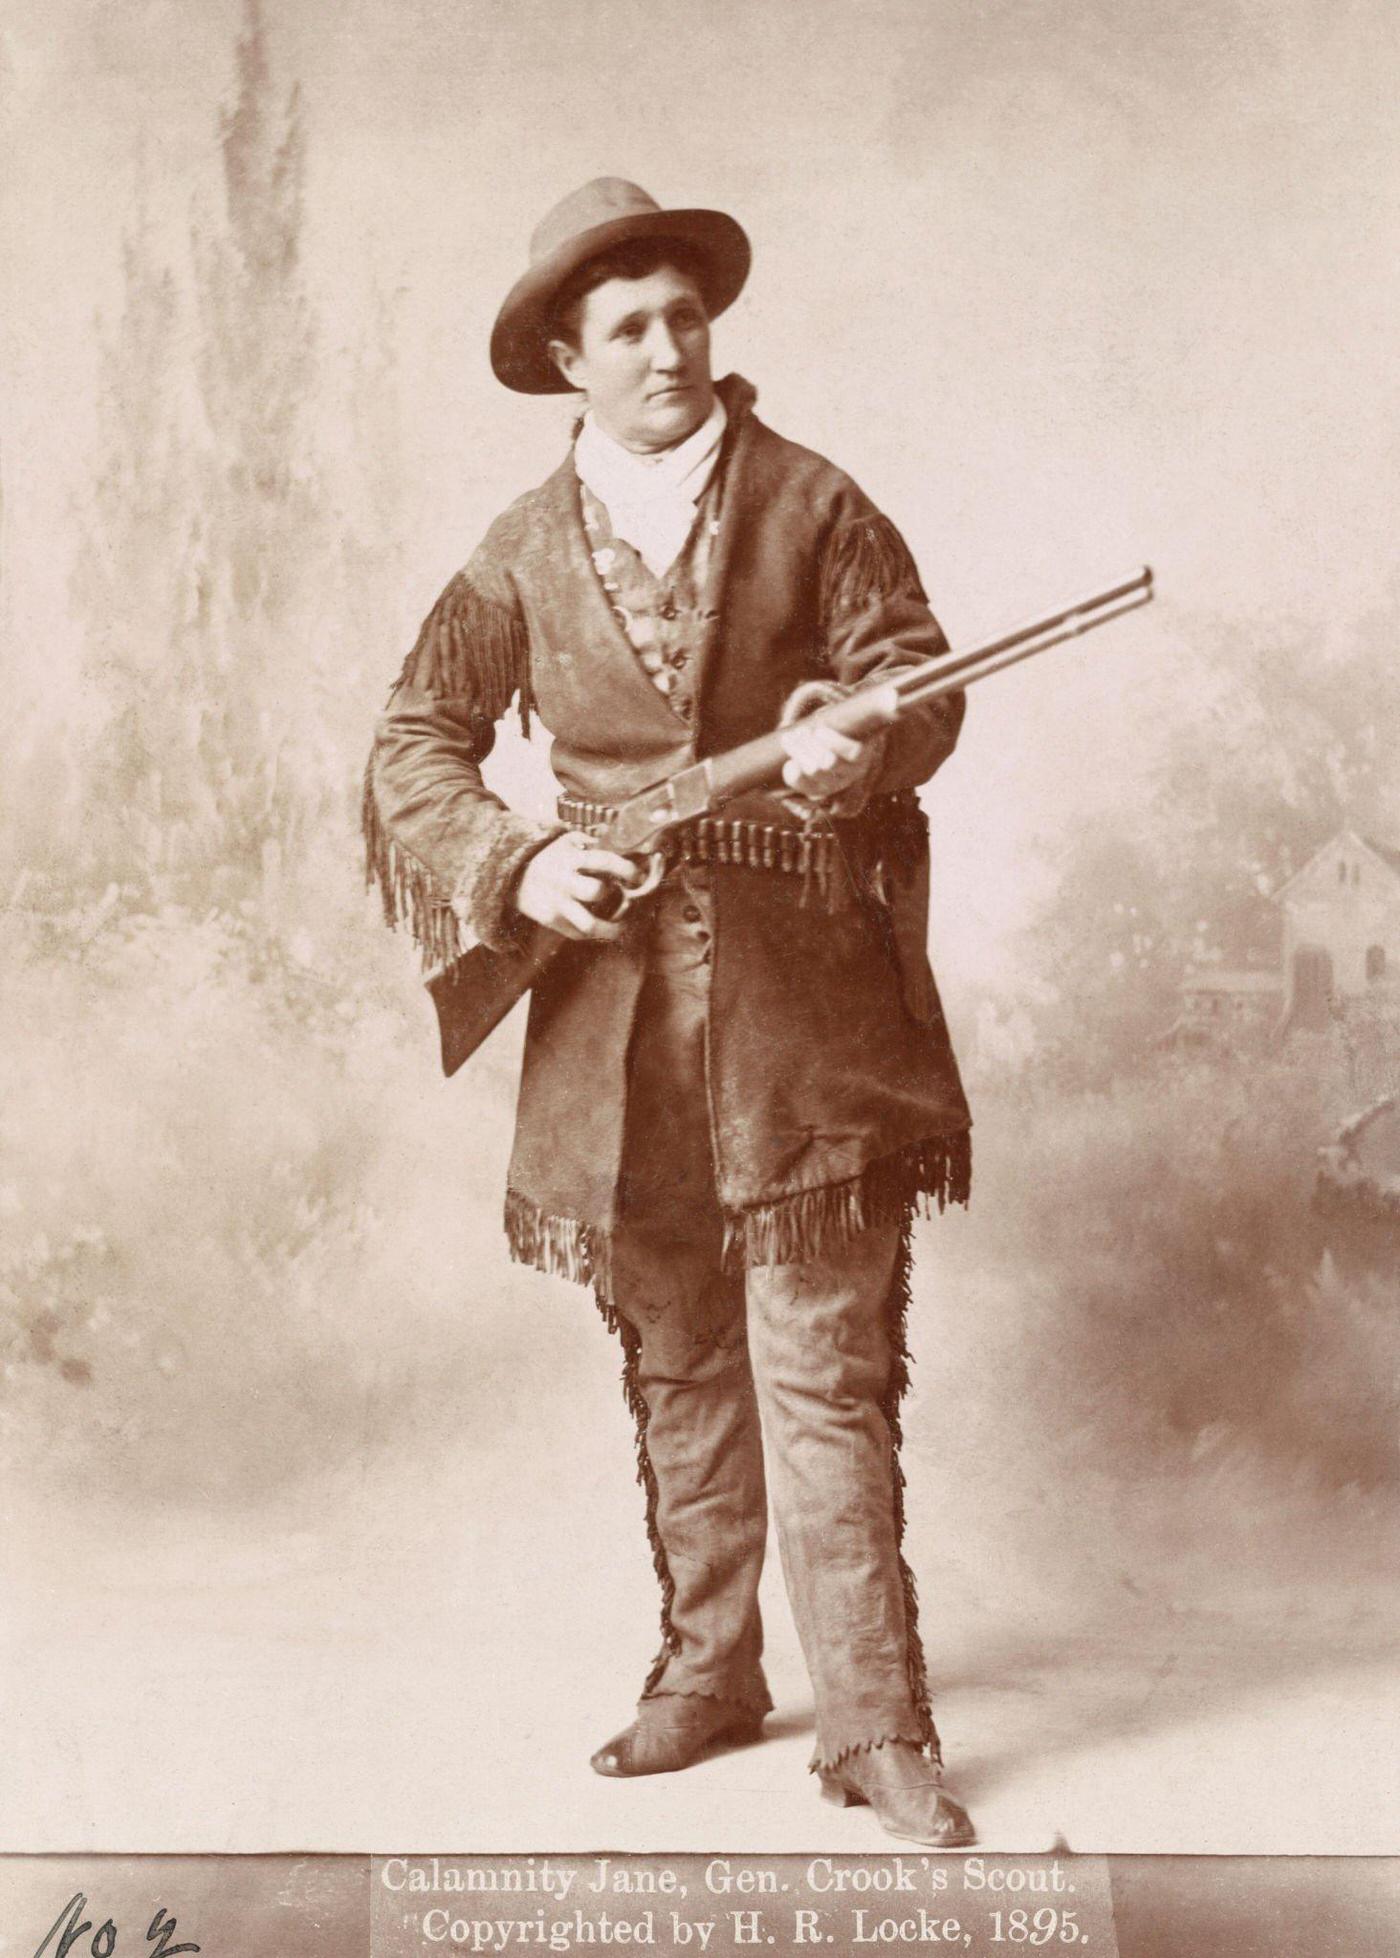 Portrait of Calamity Jane holding a rifle, 1895.